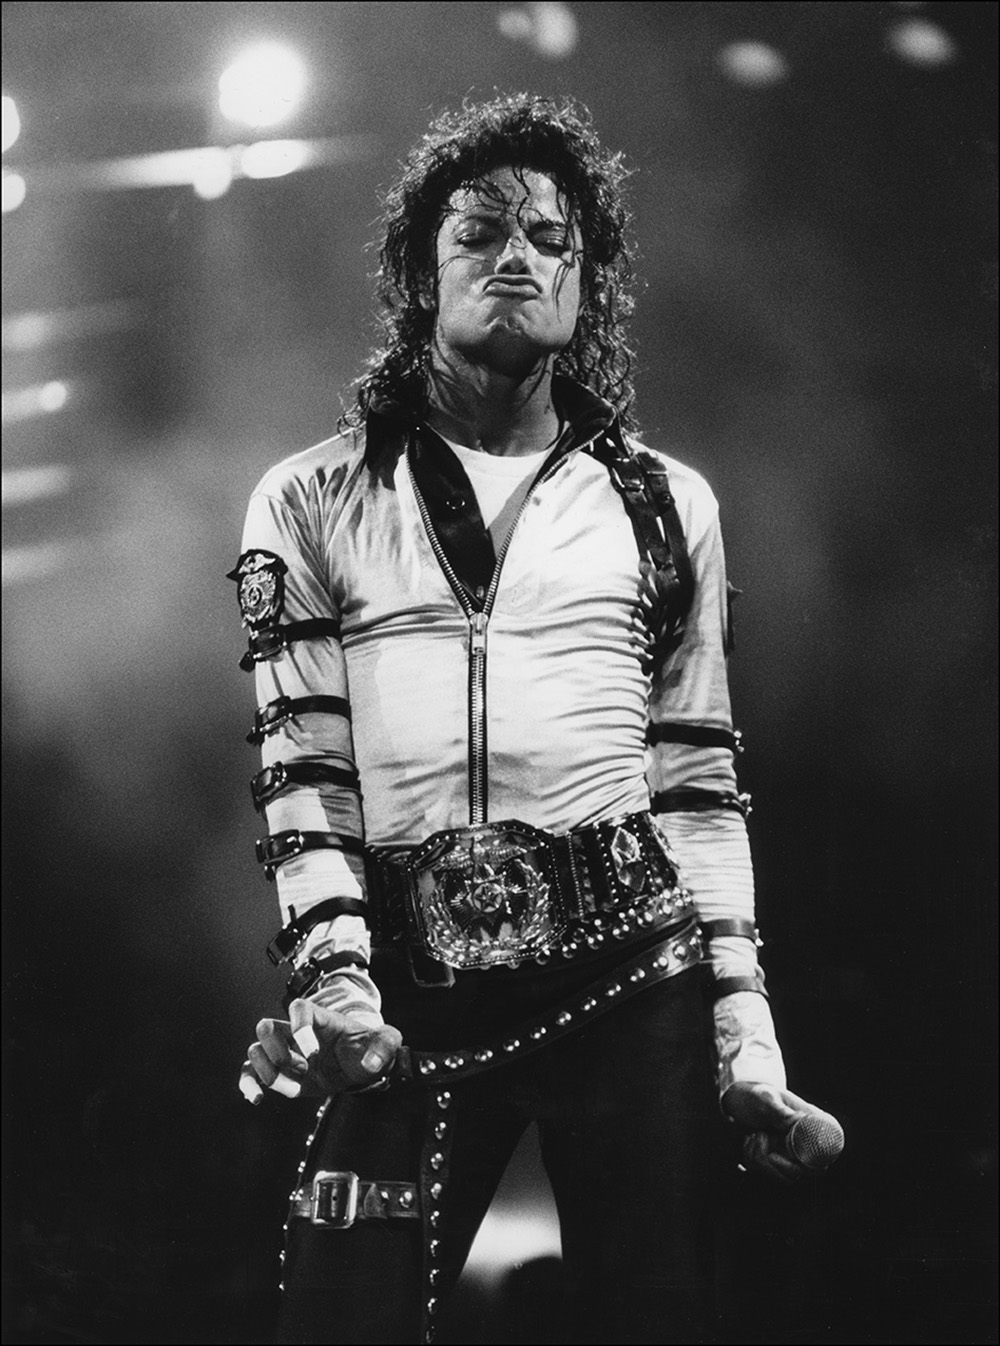 Michael Jackson on stage at Wembley Stadium, London, 16 July 1988